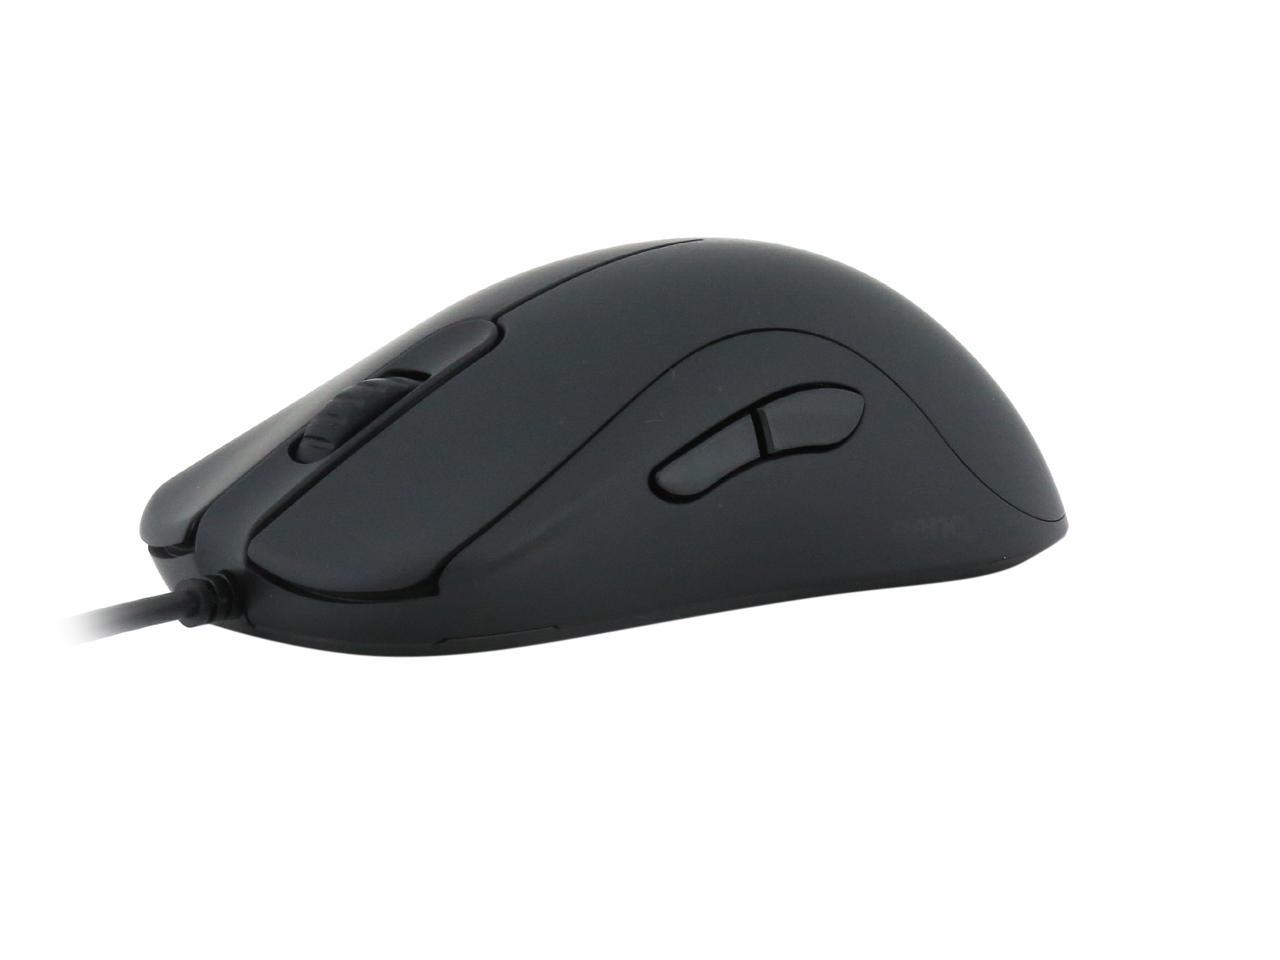 BenQ ZOWIE ZA12 Gaming Mouse, Medium Ambidextrous High Profile Design